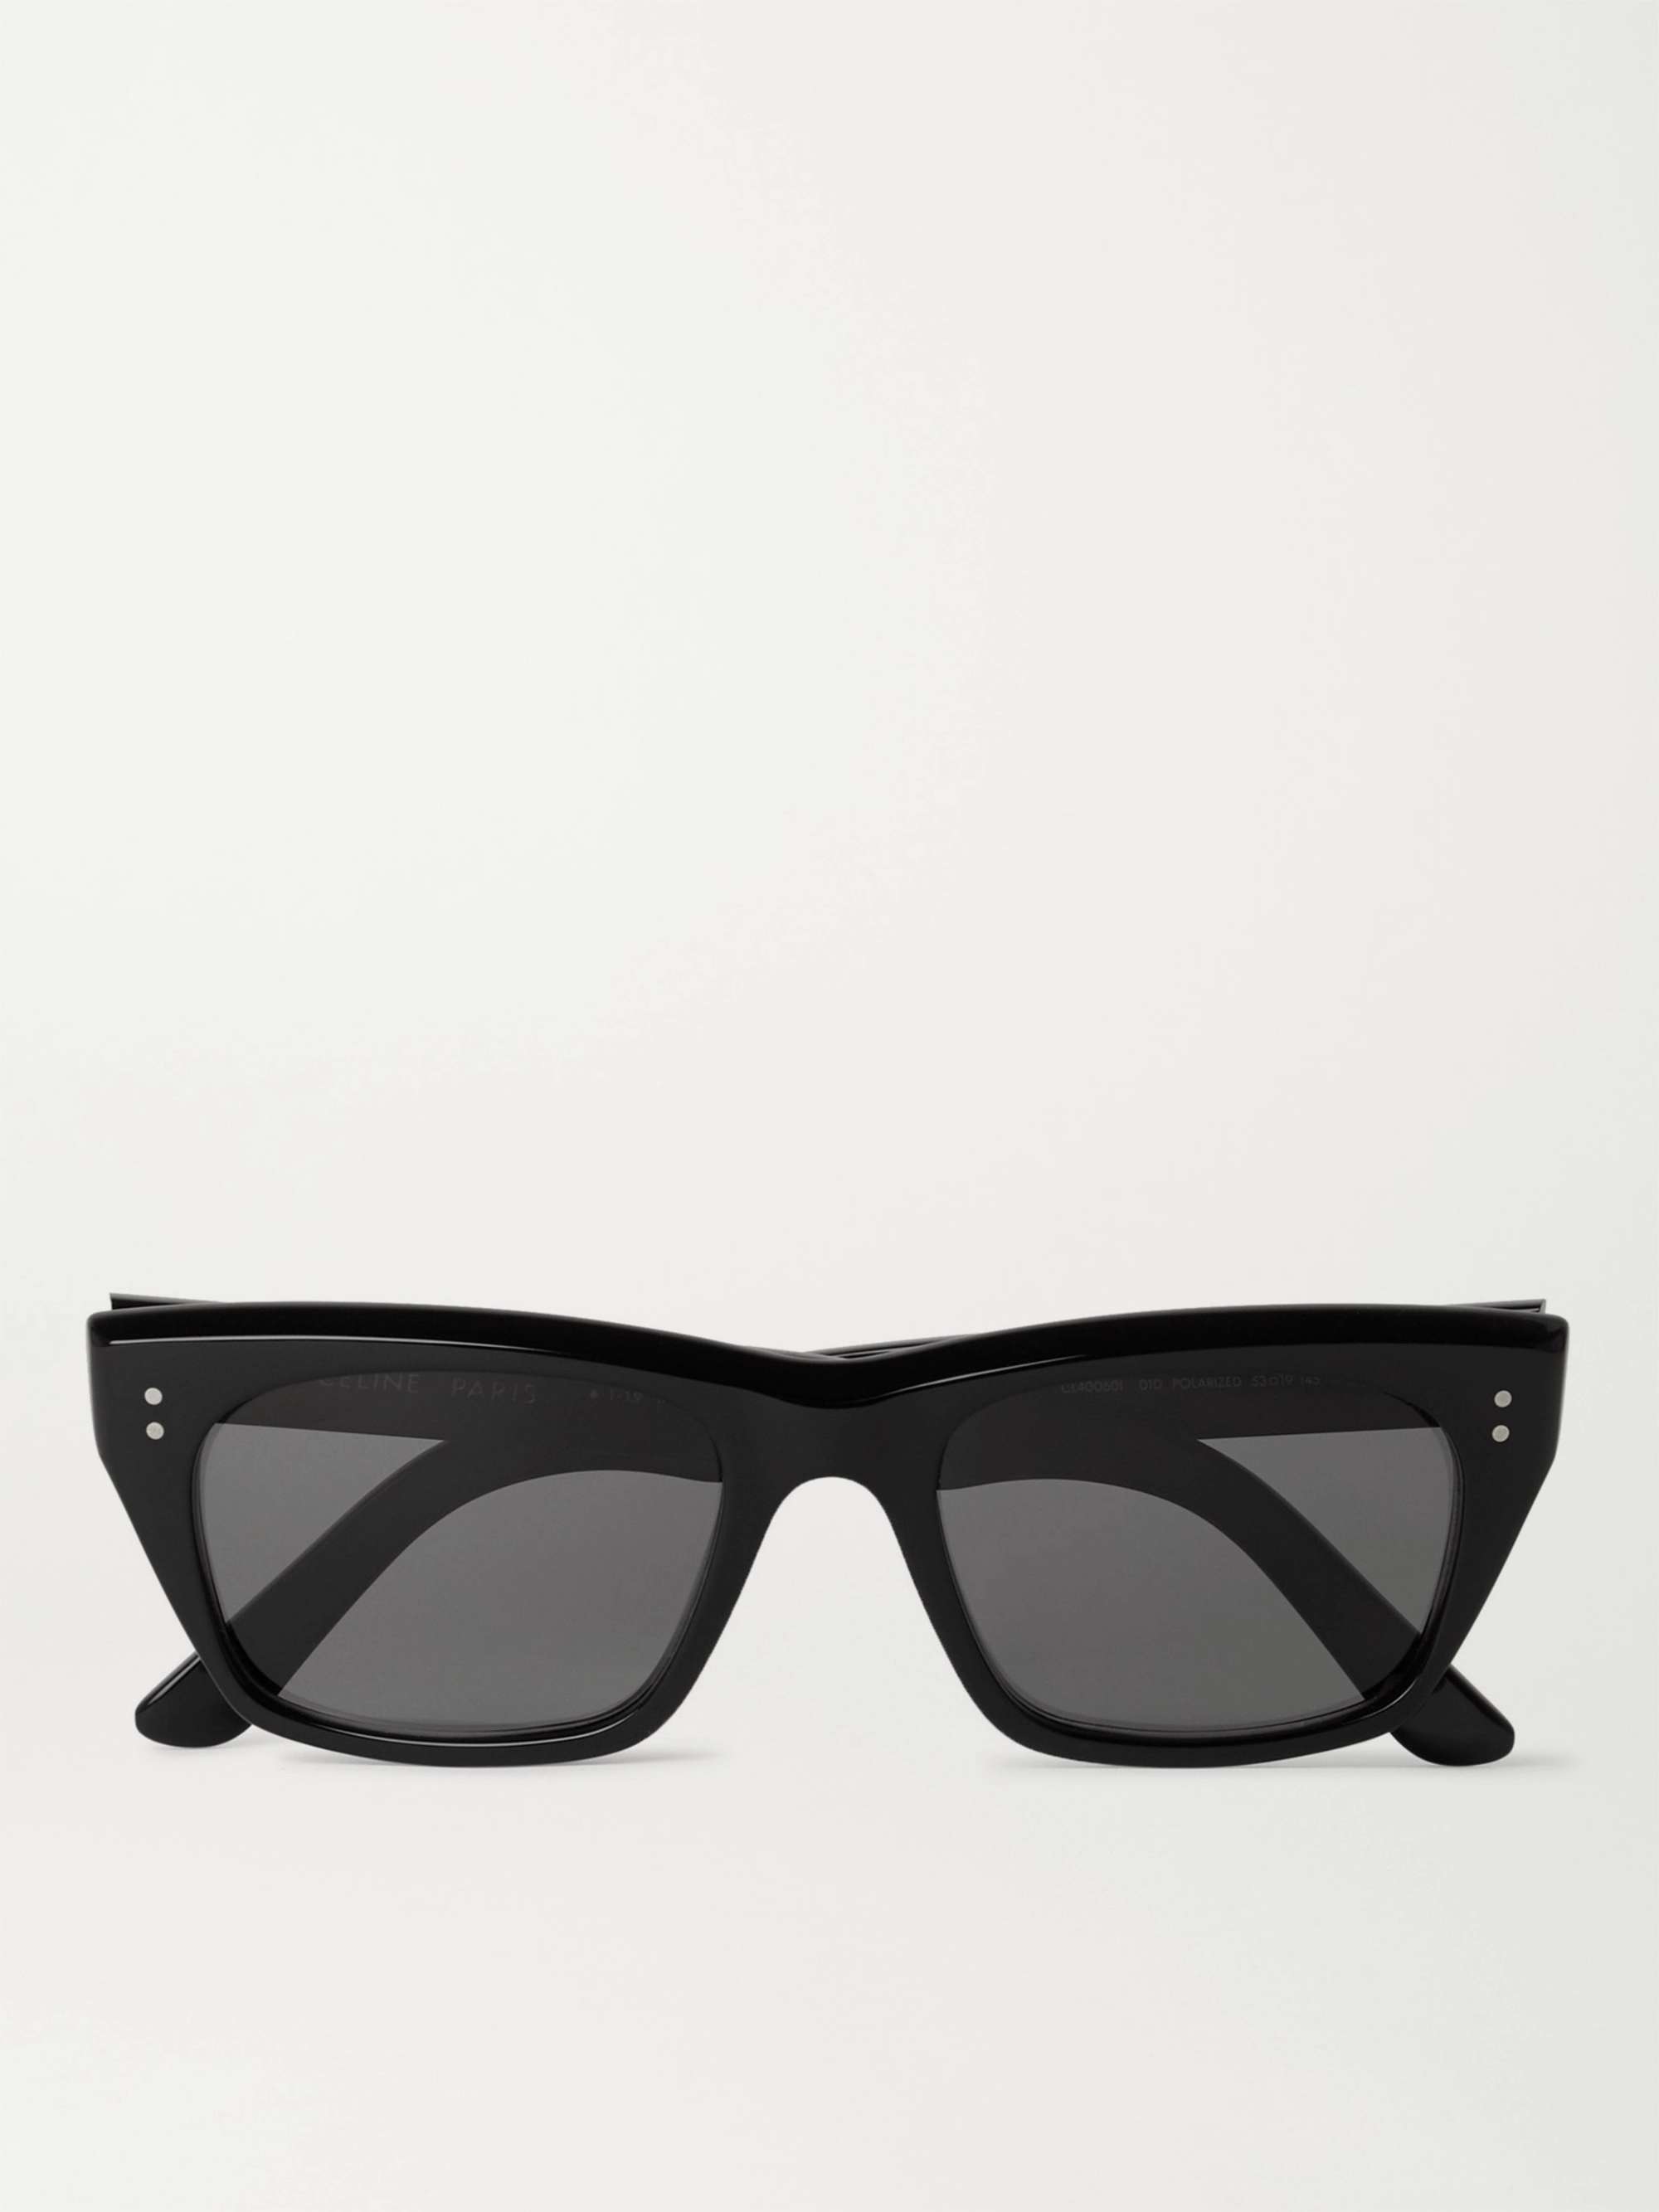 CELINE HOMME Square-Frame Acetate Sunglasses | MR PORTER